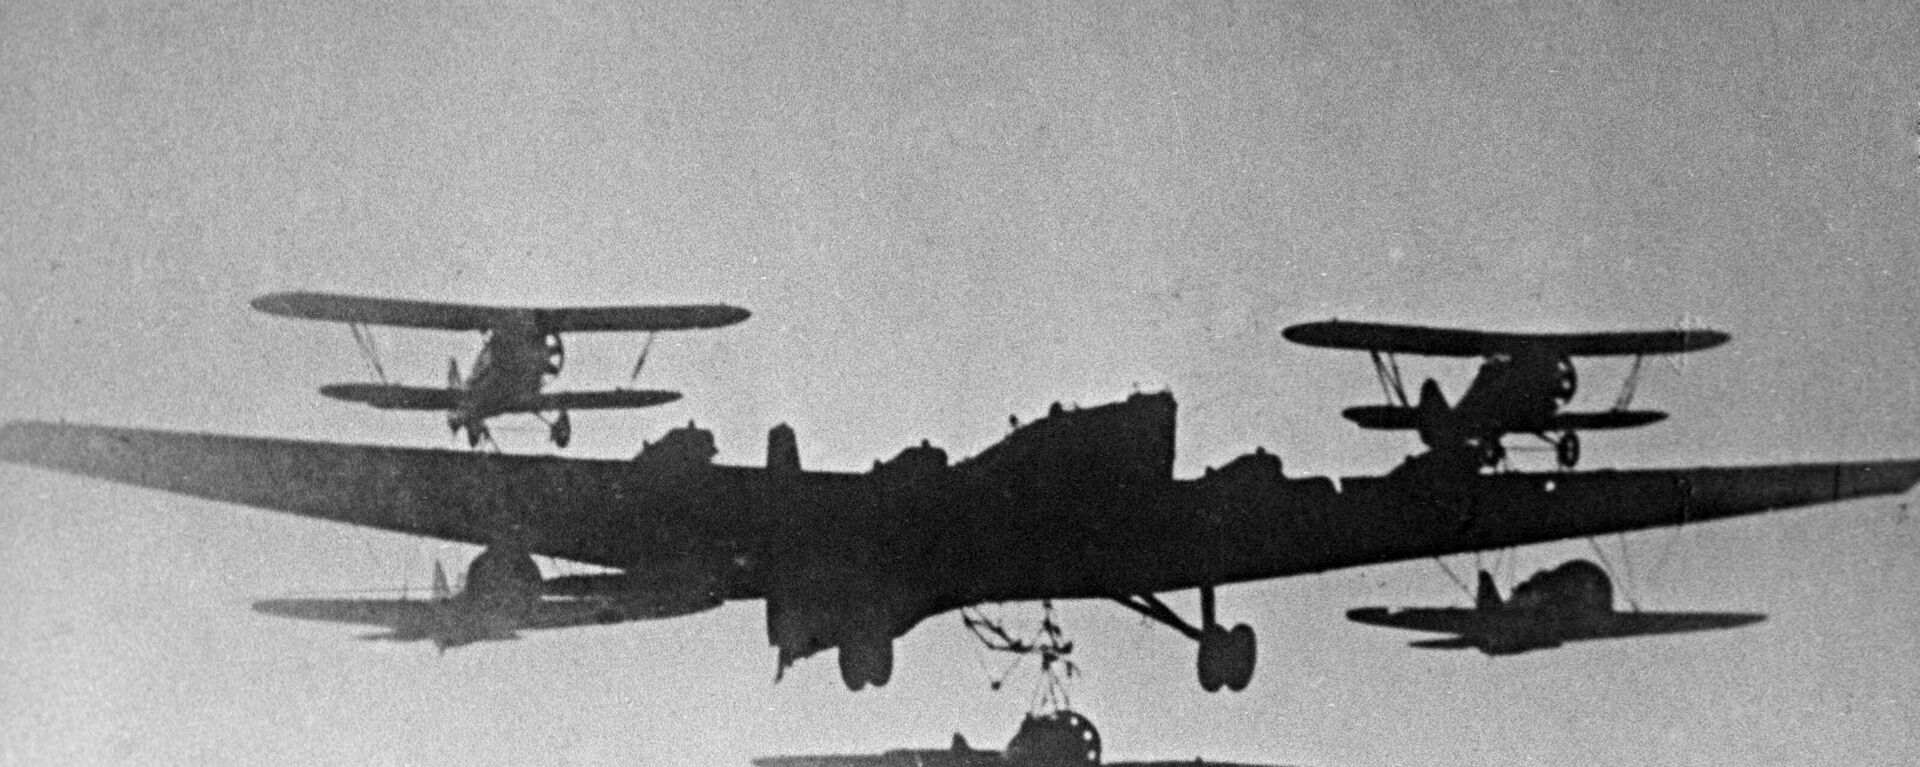 El bombardero Túpolev TB-3 del proyecto Zveno - Sputnik Mundo, 1920, 26.07.2021